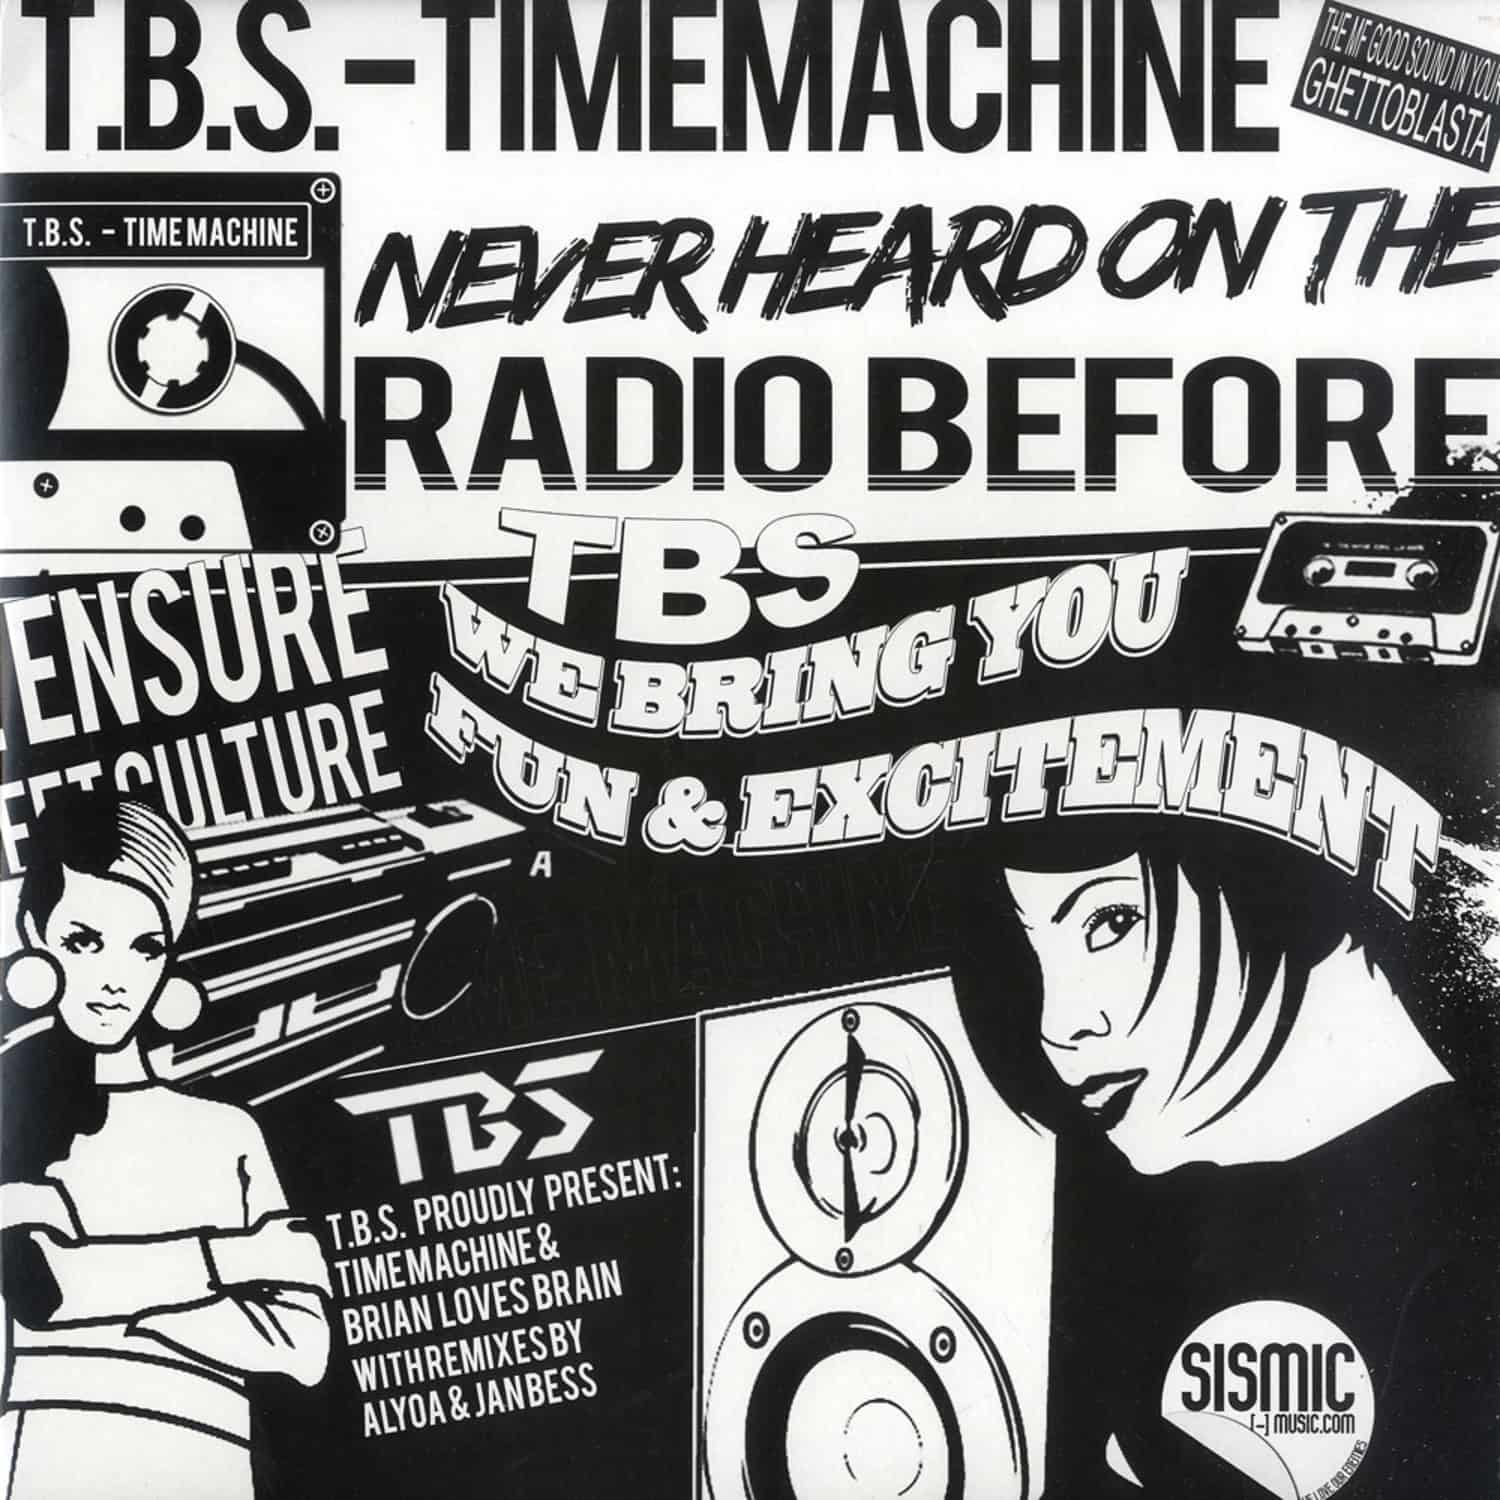 TBS - TIME MACHINE